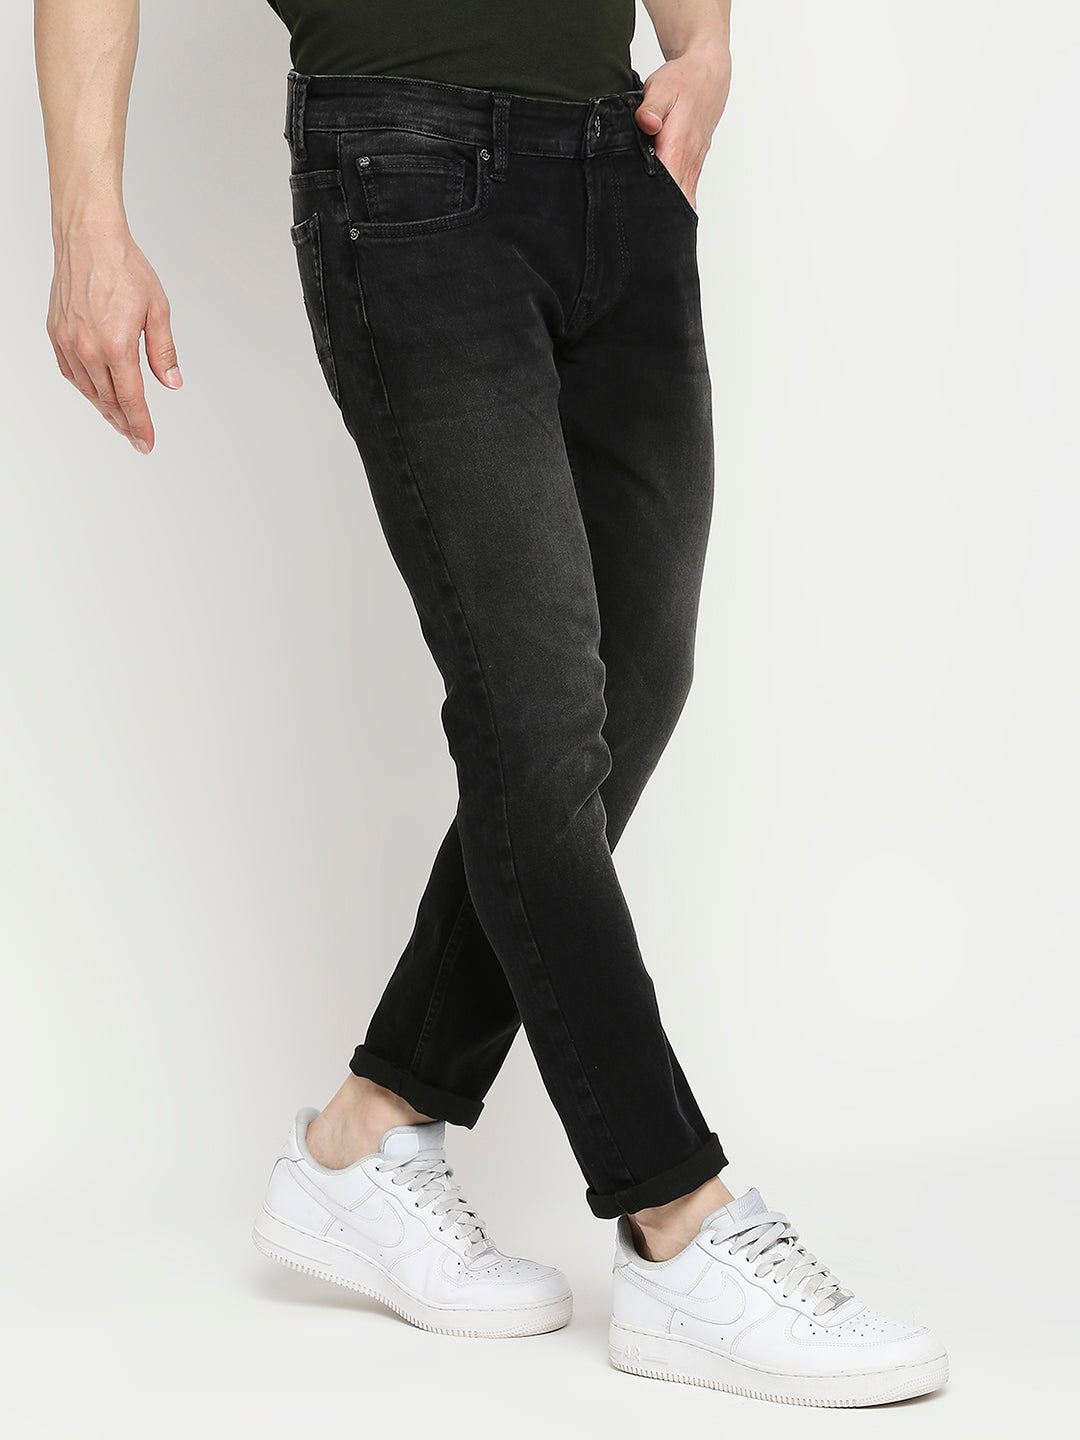 Spykar Charcoal Black Cotton Slim Fit Narrow Length Jeans For Men (Skinny)